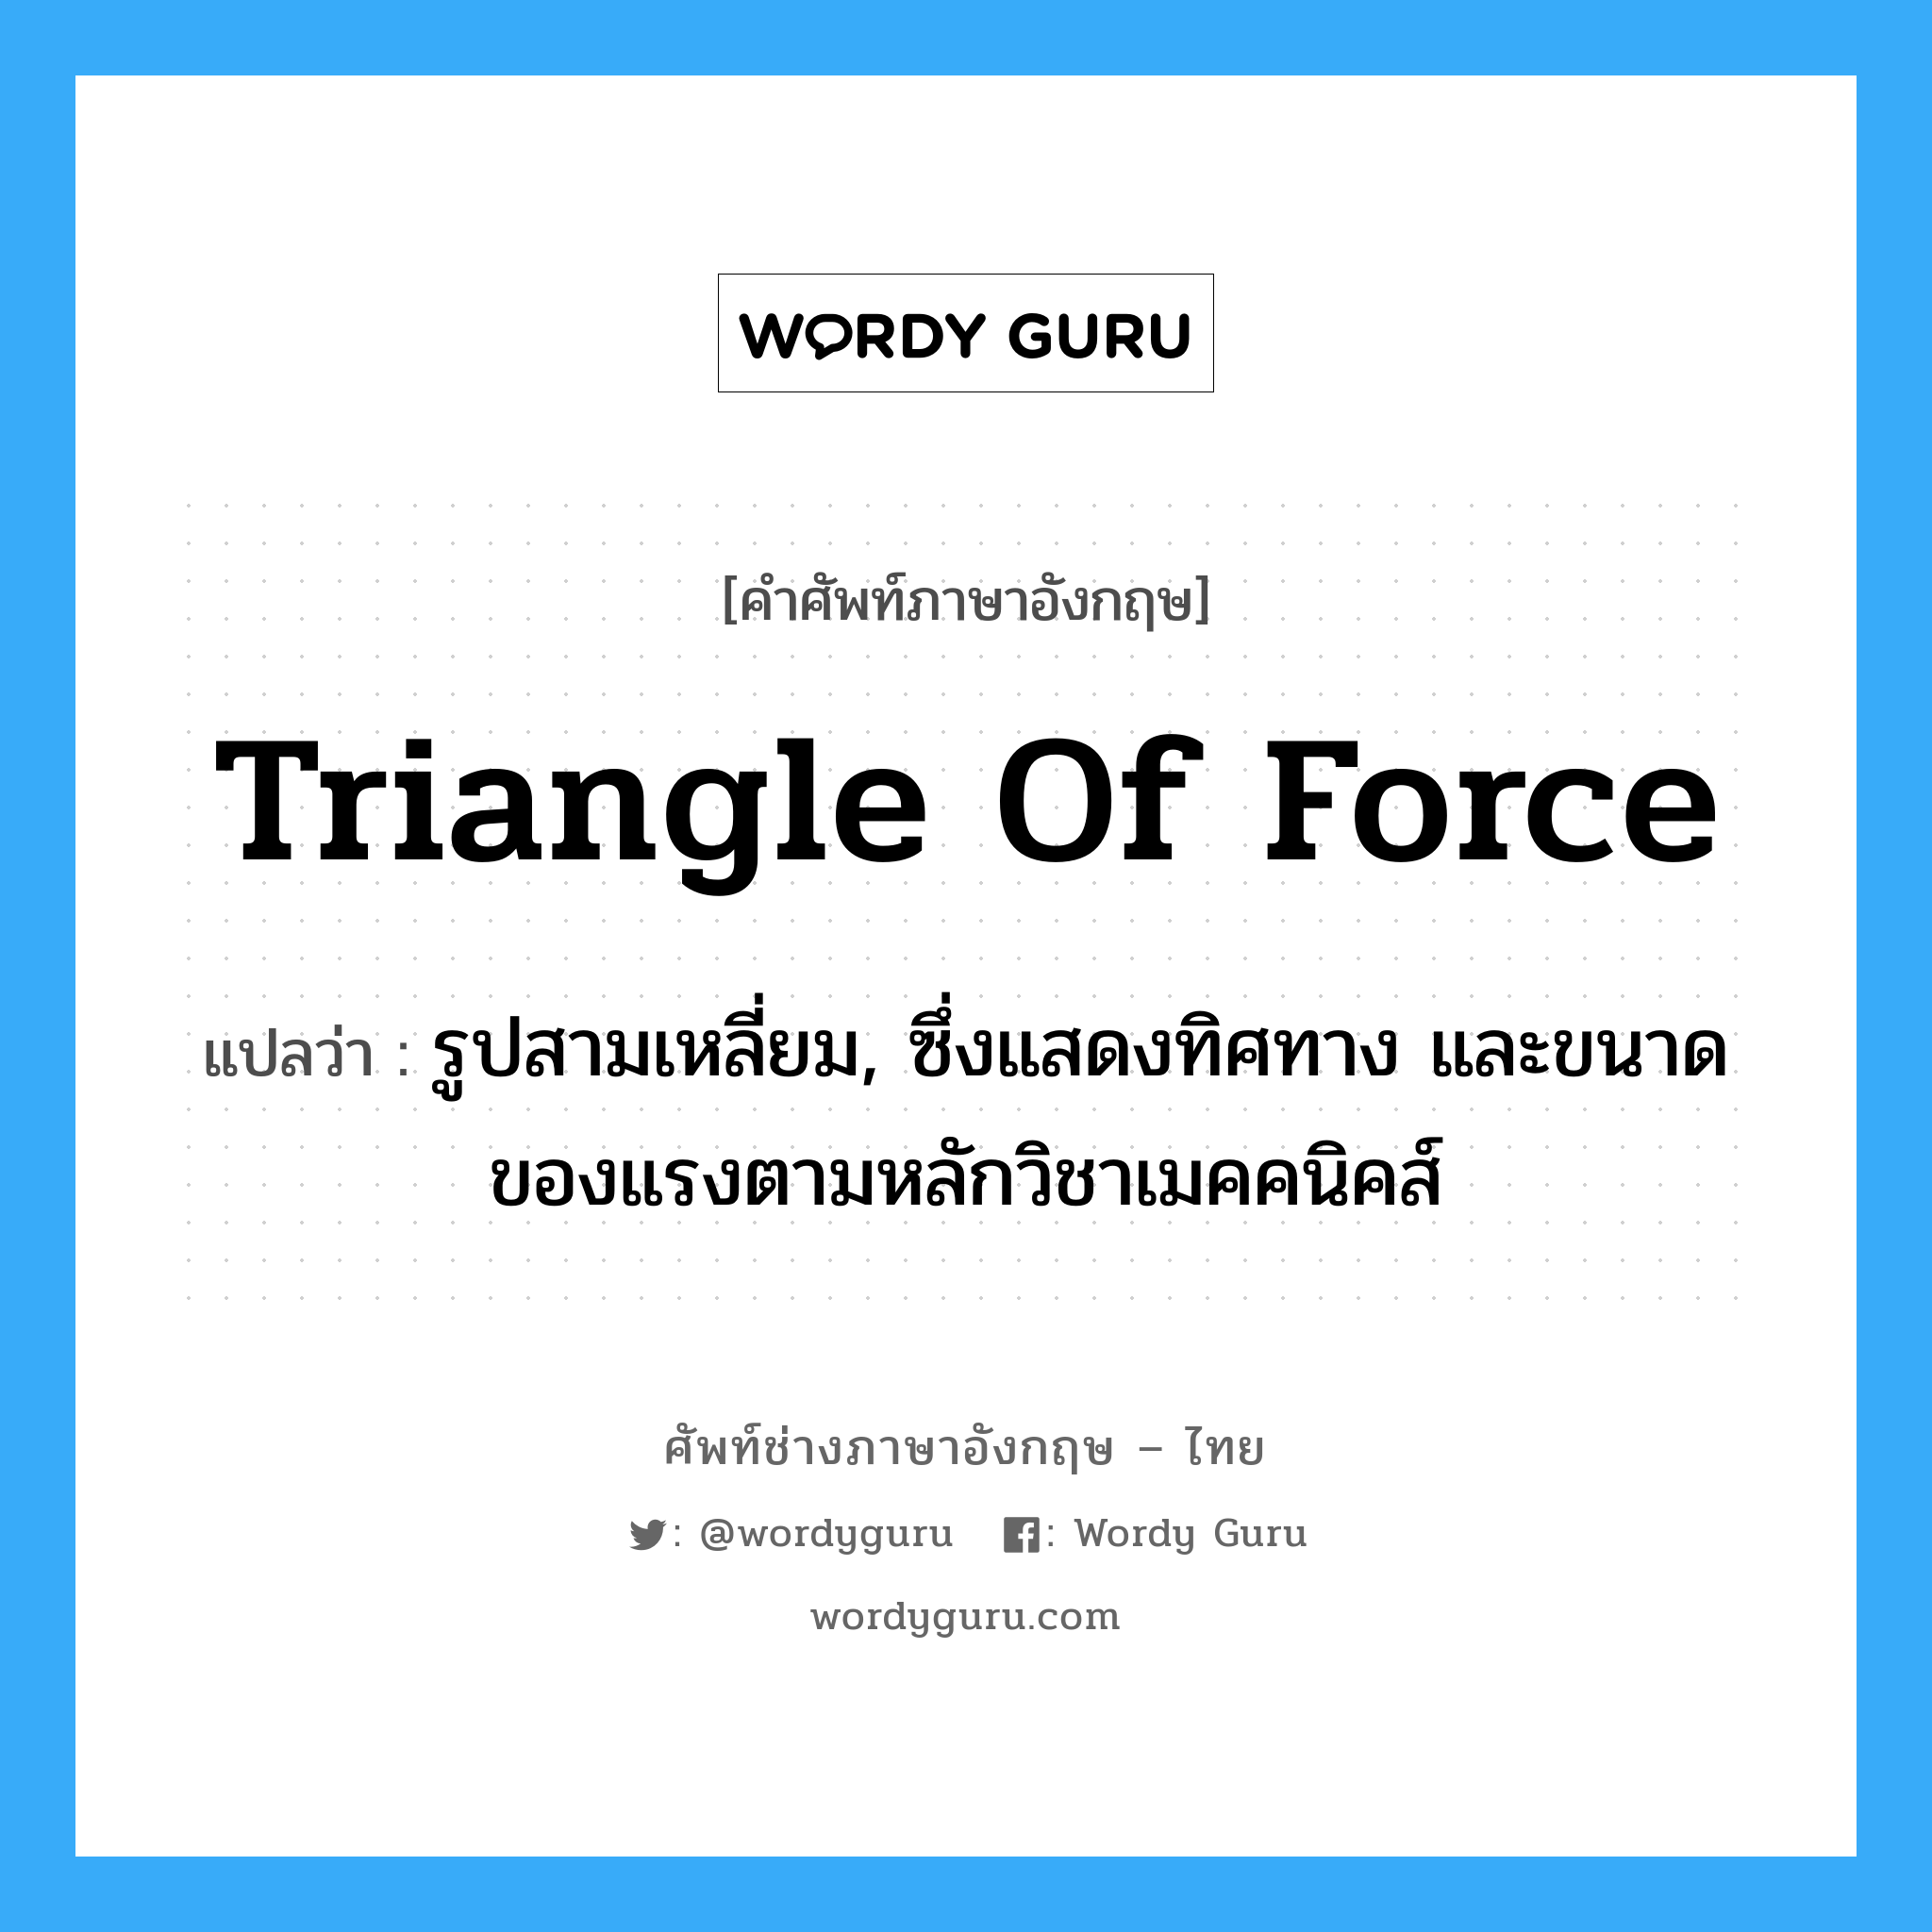 triangle of force แปลว่า?, คำศัพท์ช่างภาษาอังกฤษ - ไทย triangle of force คำศัพท์ภาษาอังกฤษ triangle of force แปลว่า รูปสามเหลี่ยม, ซึ่งแสดงทิศทาง และขนาดของแรงตามหลักวิชาเมคคนิคส์